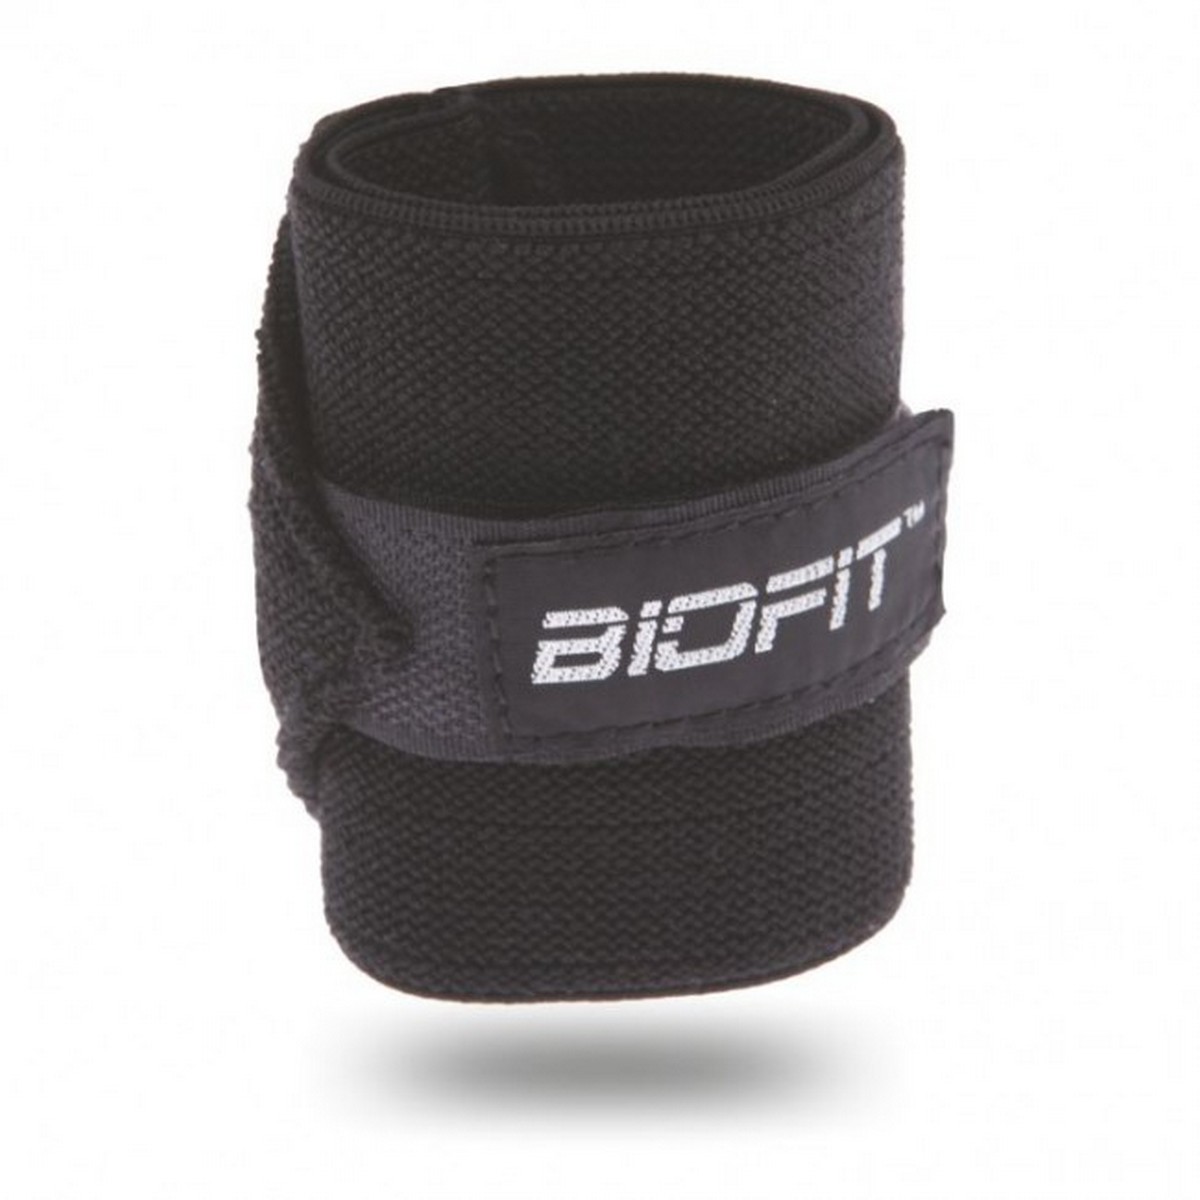 Biofit Pro Slip 125  Biofit Pro Slip 1251